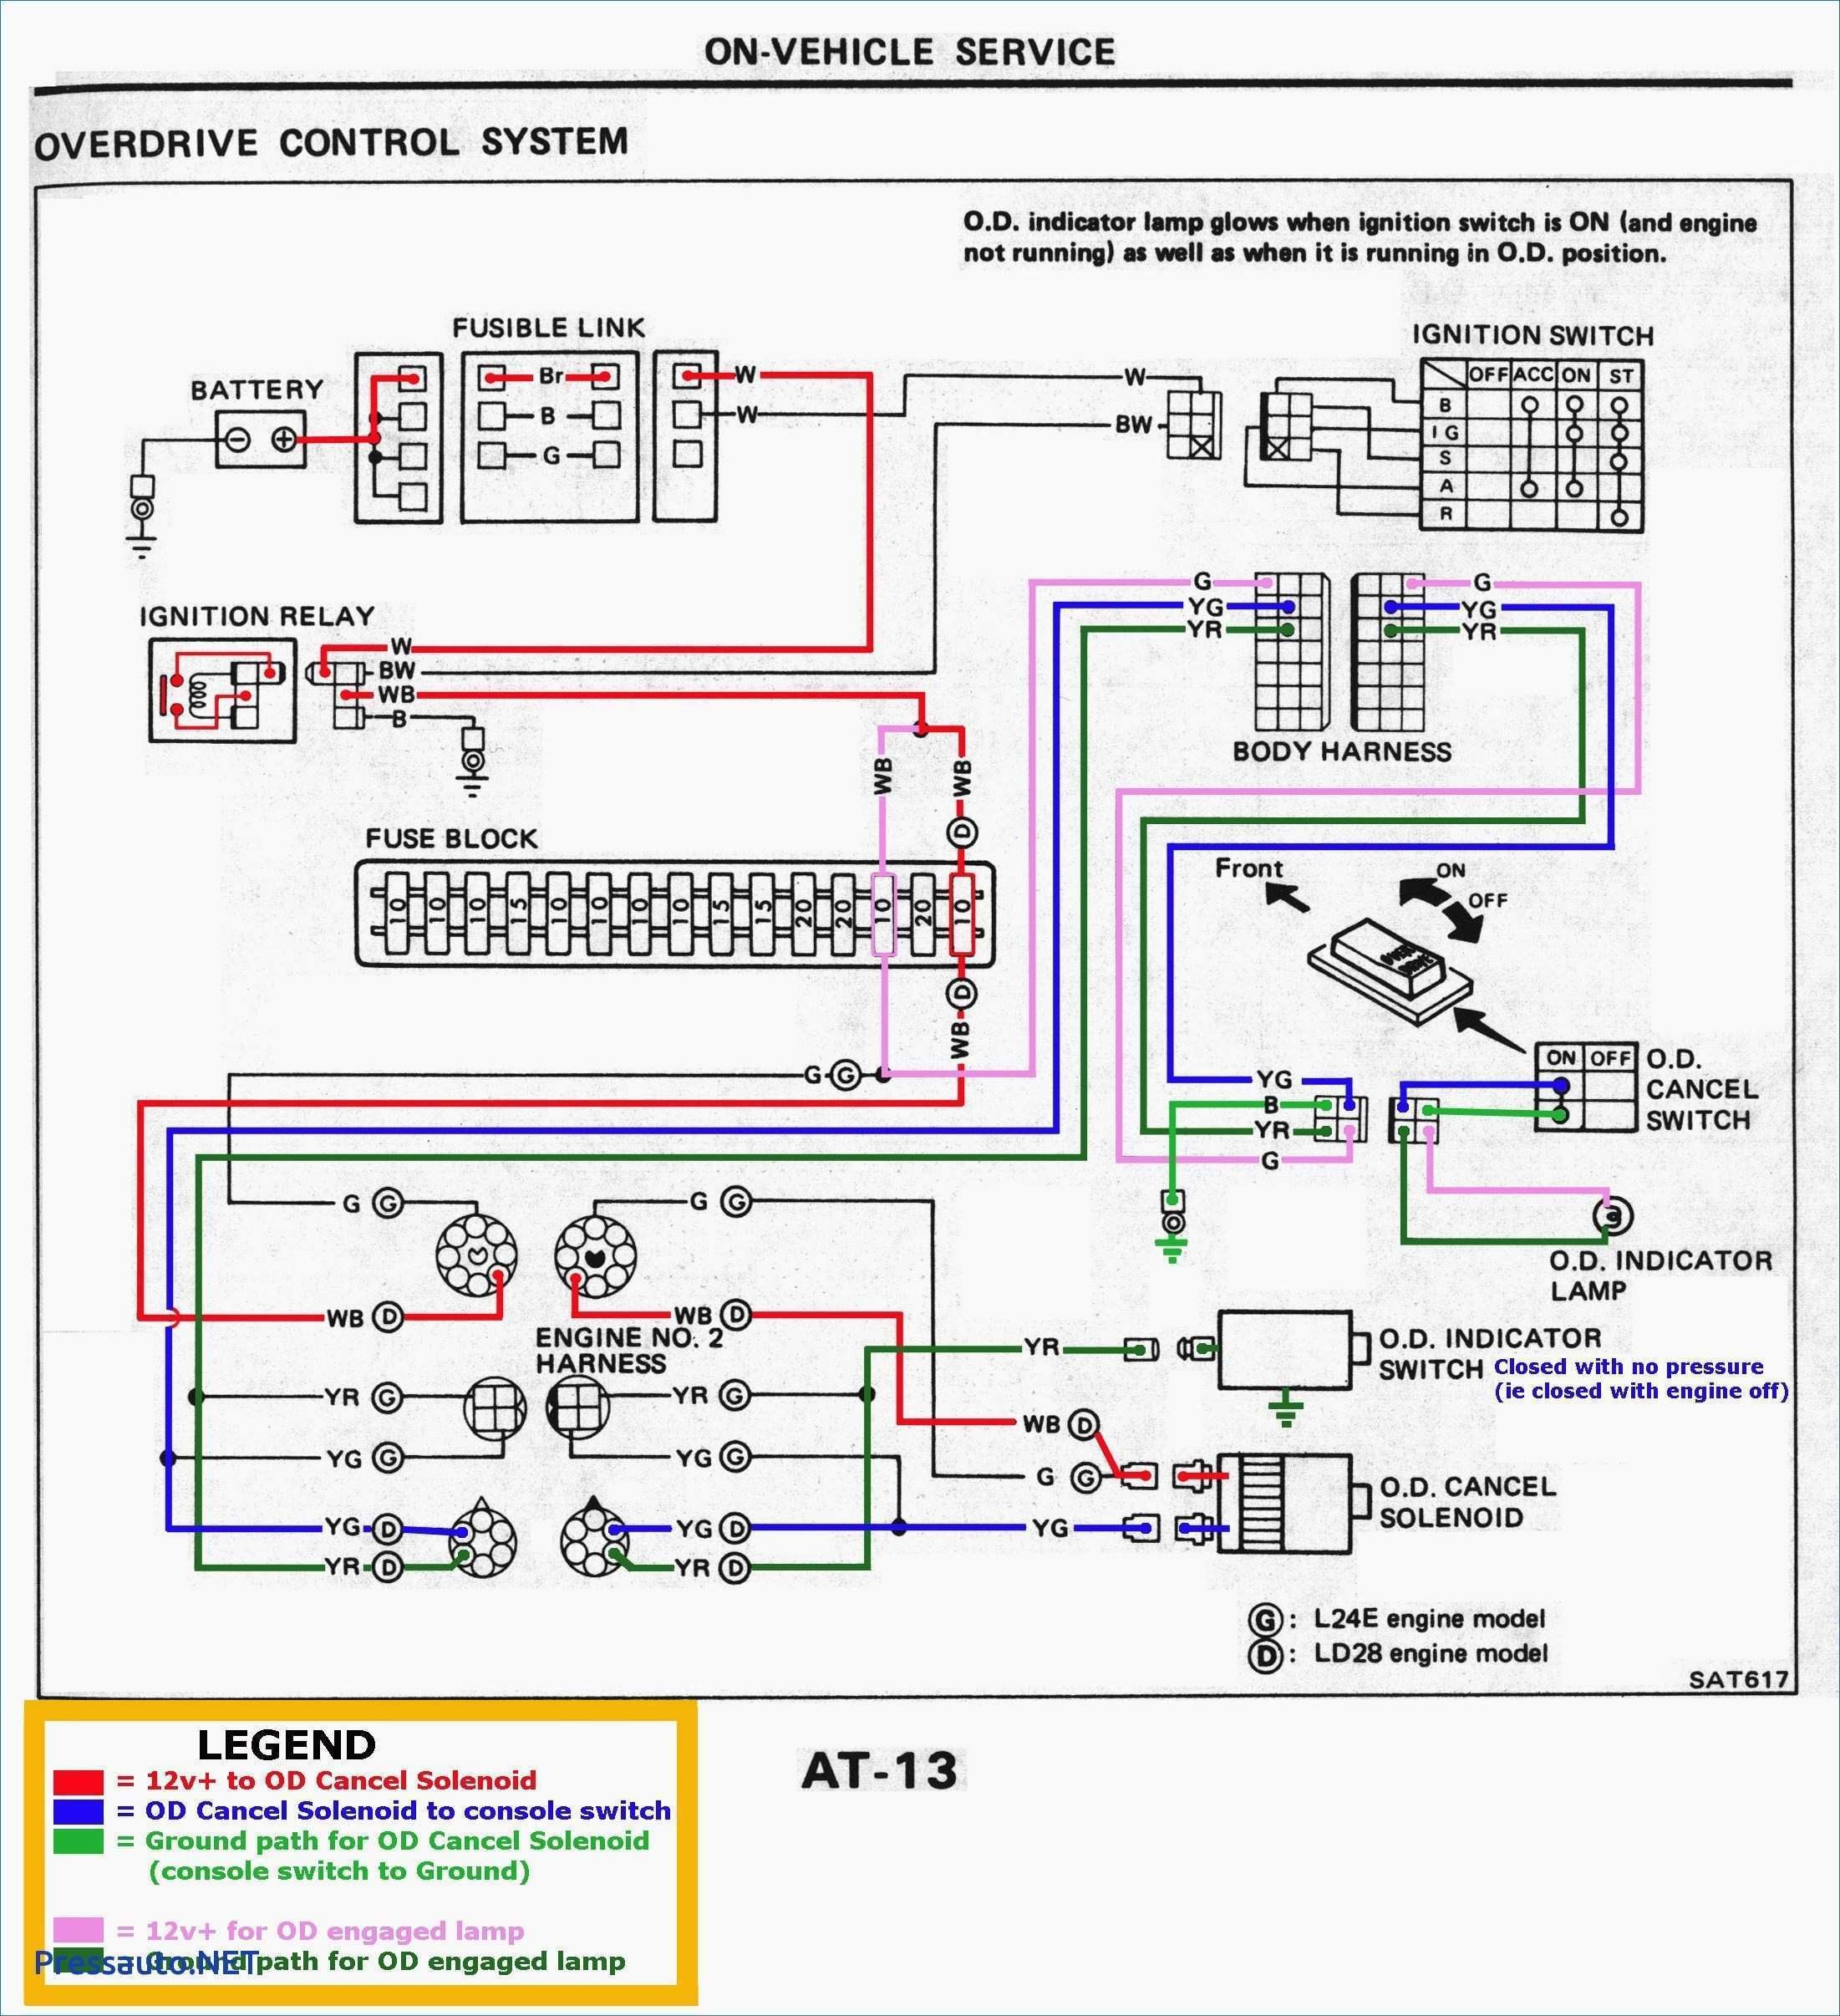 Free Wiring Diagrams For Dodge Trucks Sample Pdf Free Wiring Diagrams For Dodge Trucks Elegant Magnificent Wiring